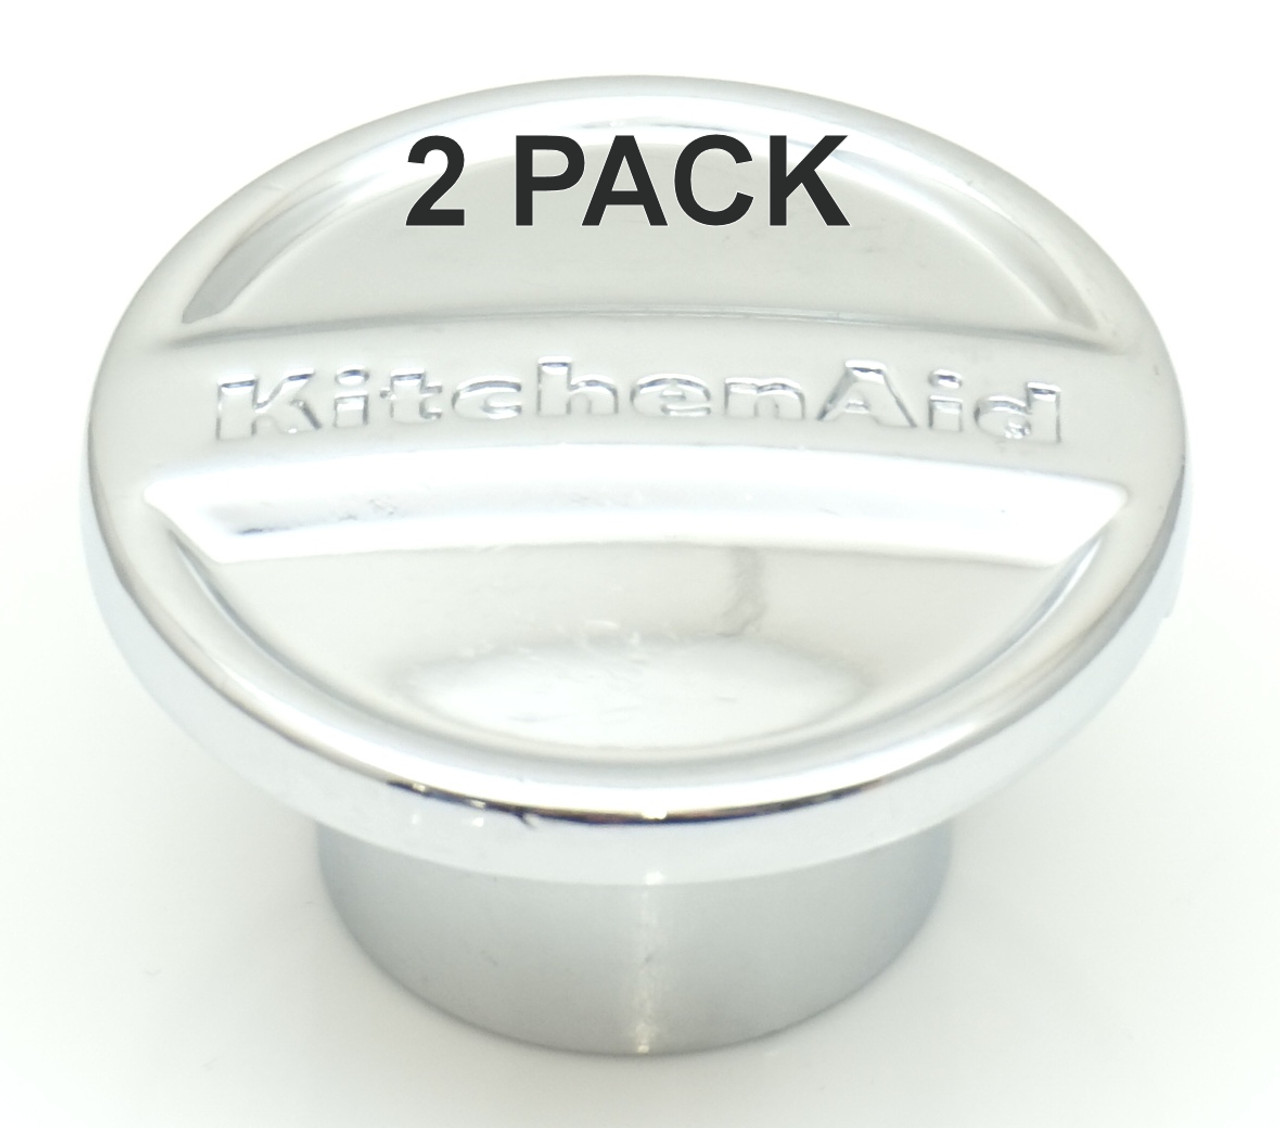 KitchenAid KSM90 Stand Mixer Replacement Part - Attachment Hub Cover & Knob